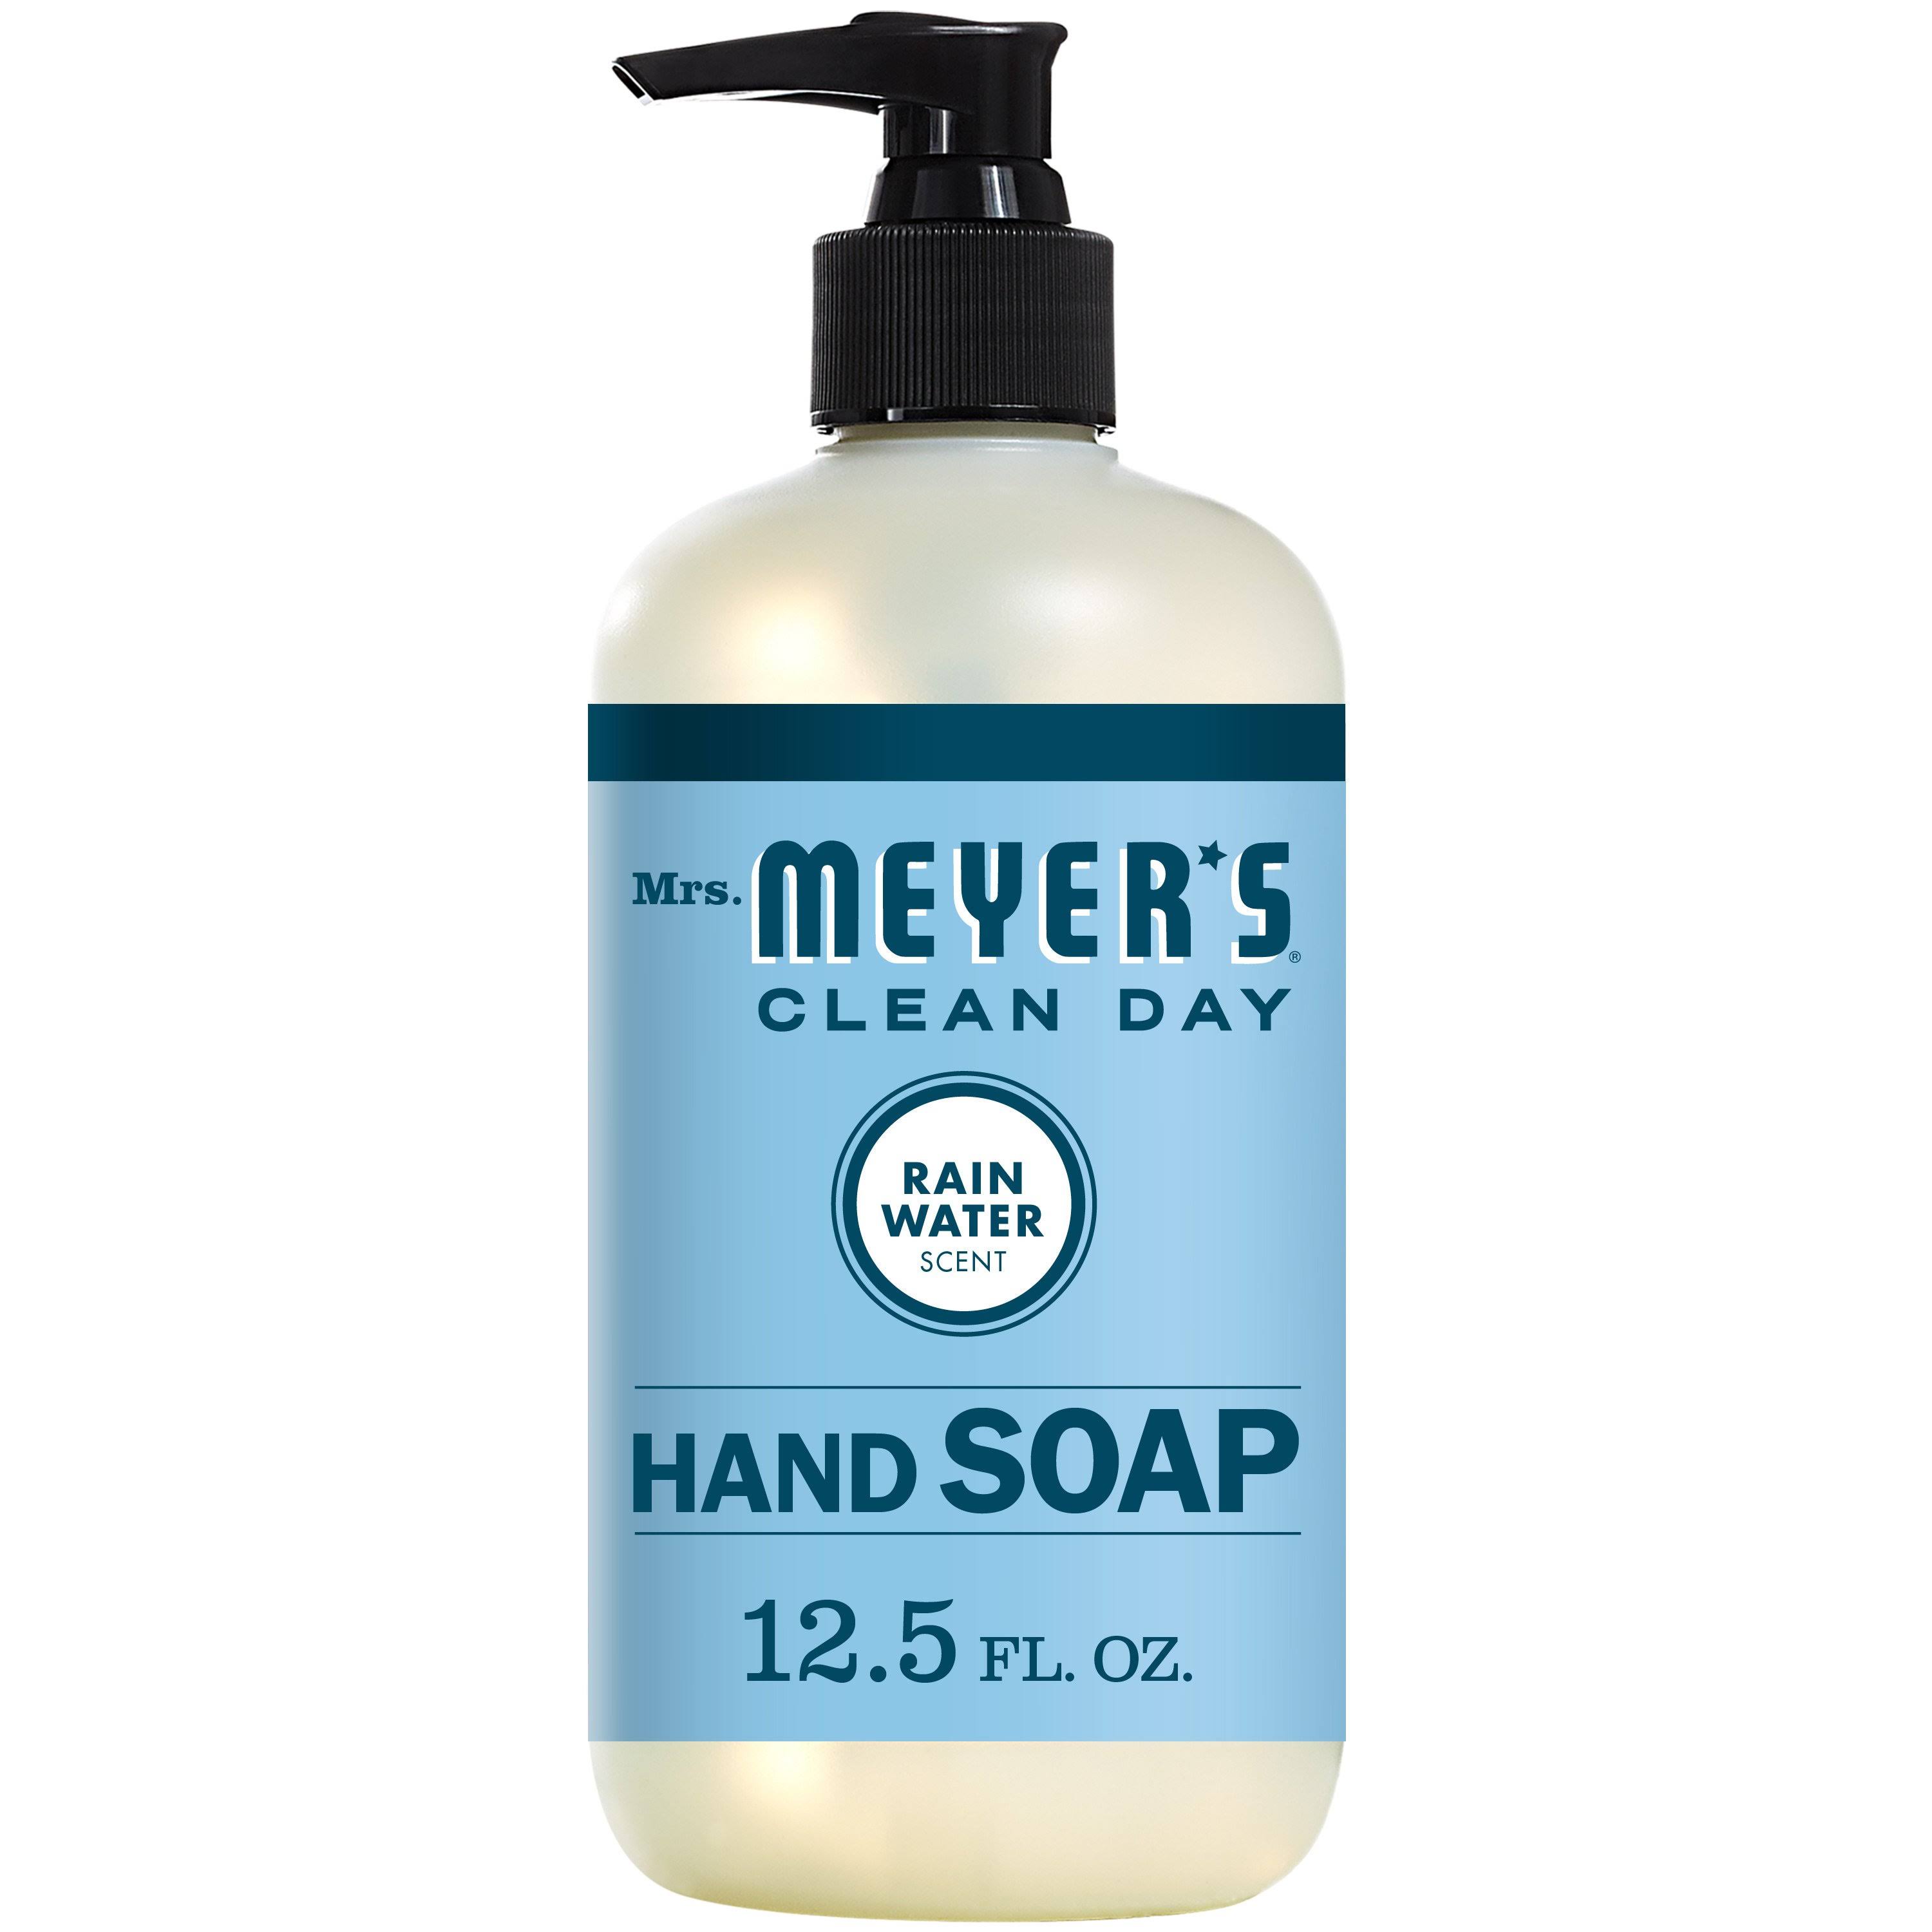 Mrs. Meyers Clean Day, Hand Soap, Rain Water, 12.5 fl oz (370 ml)